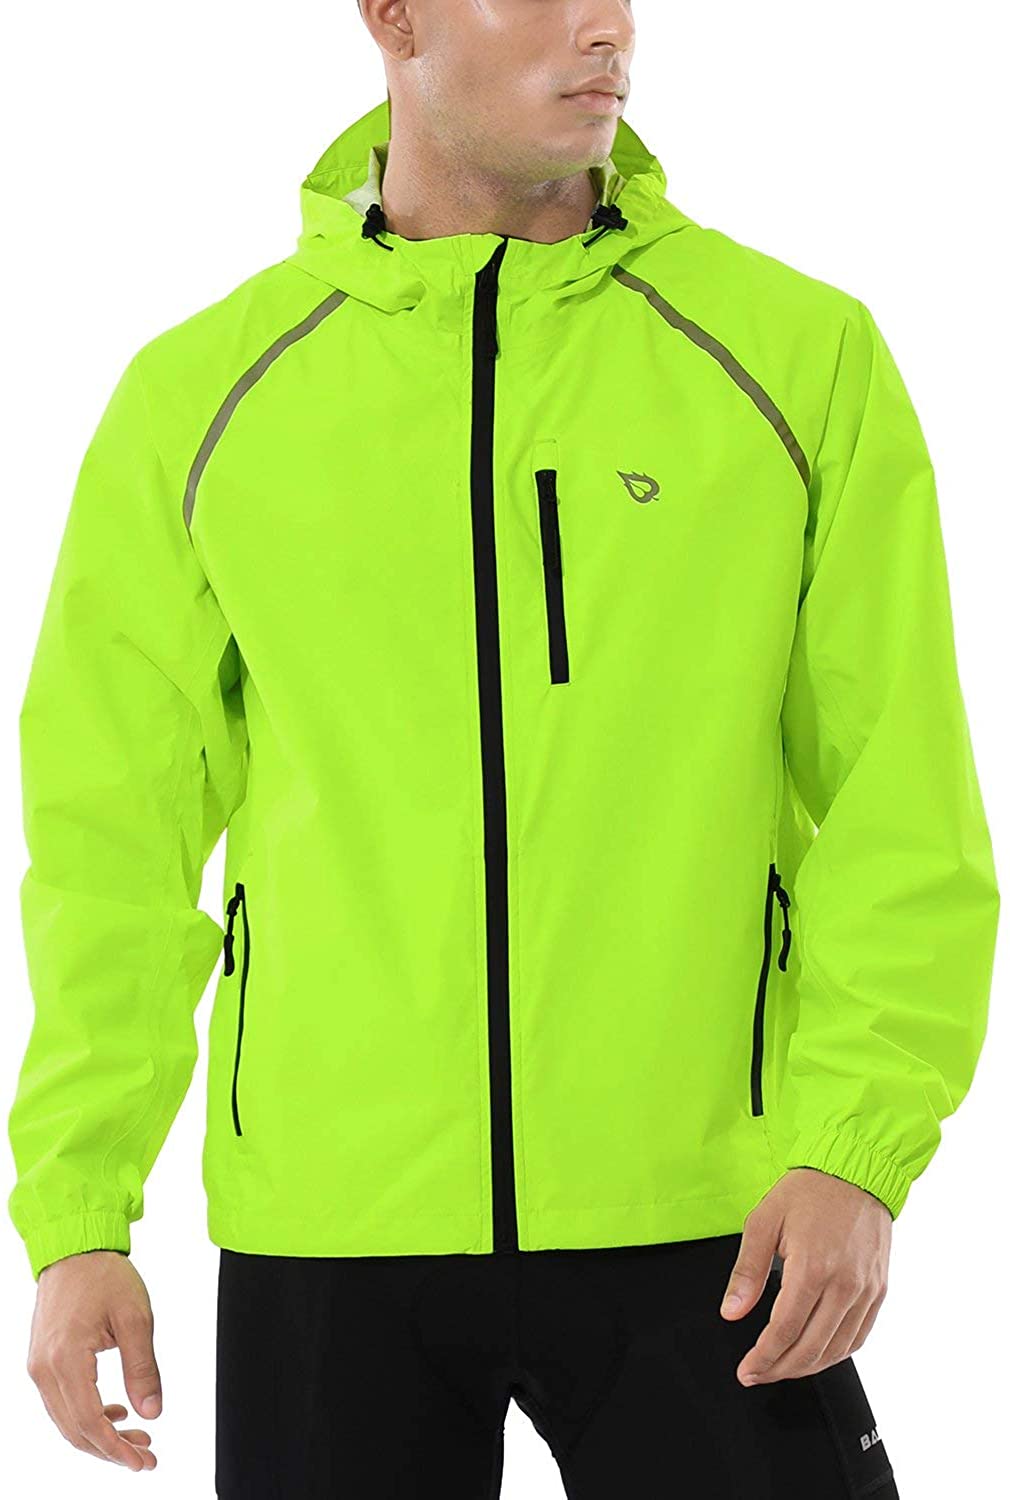 BALEAF Men's Cycling Running Jacket Waterproof Reflective Lightweight ...